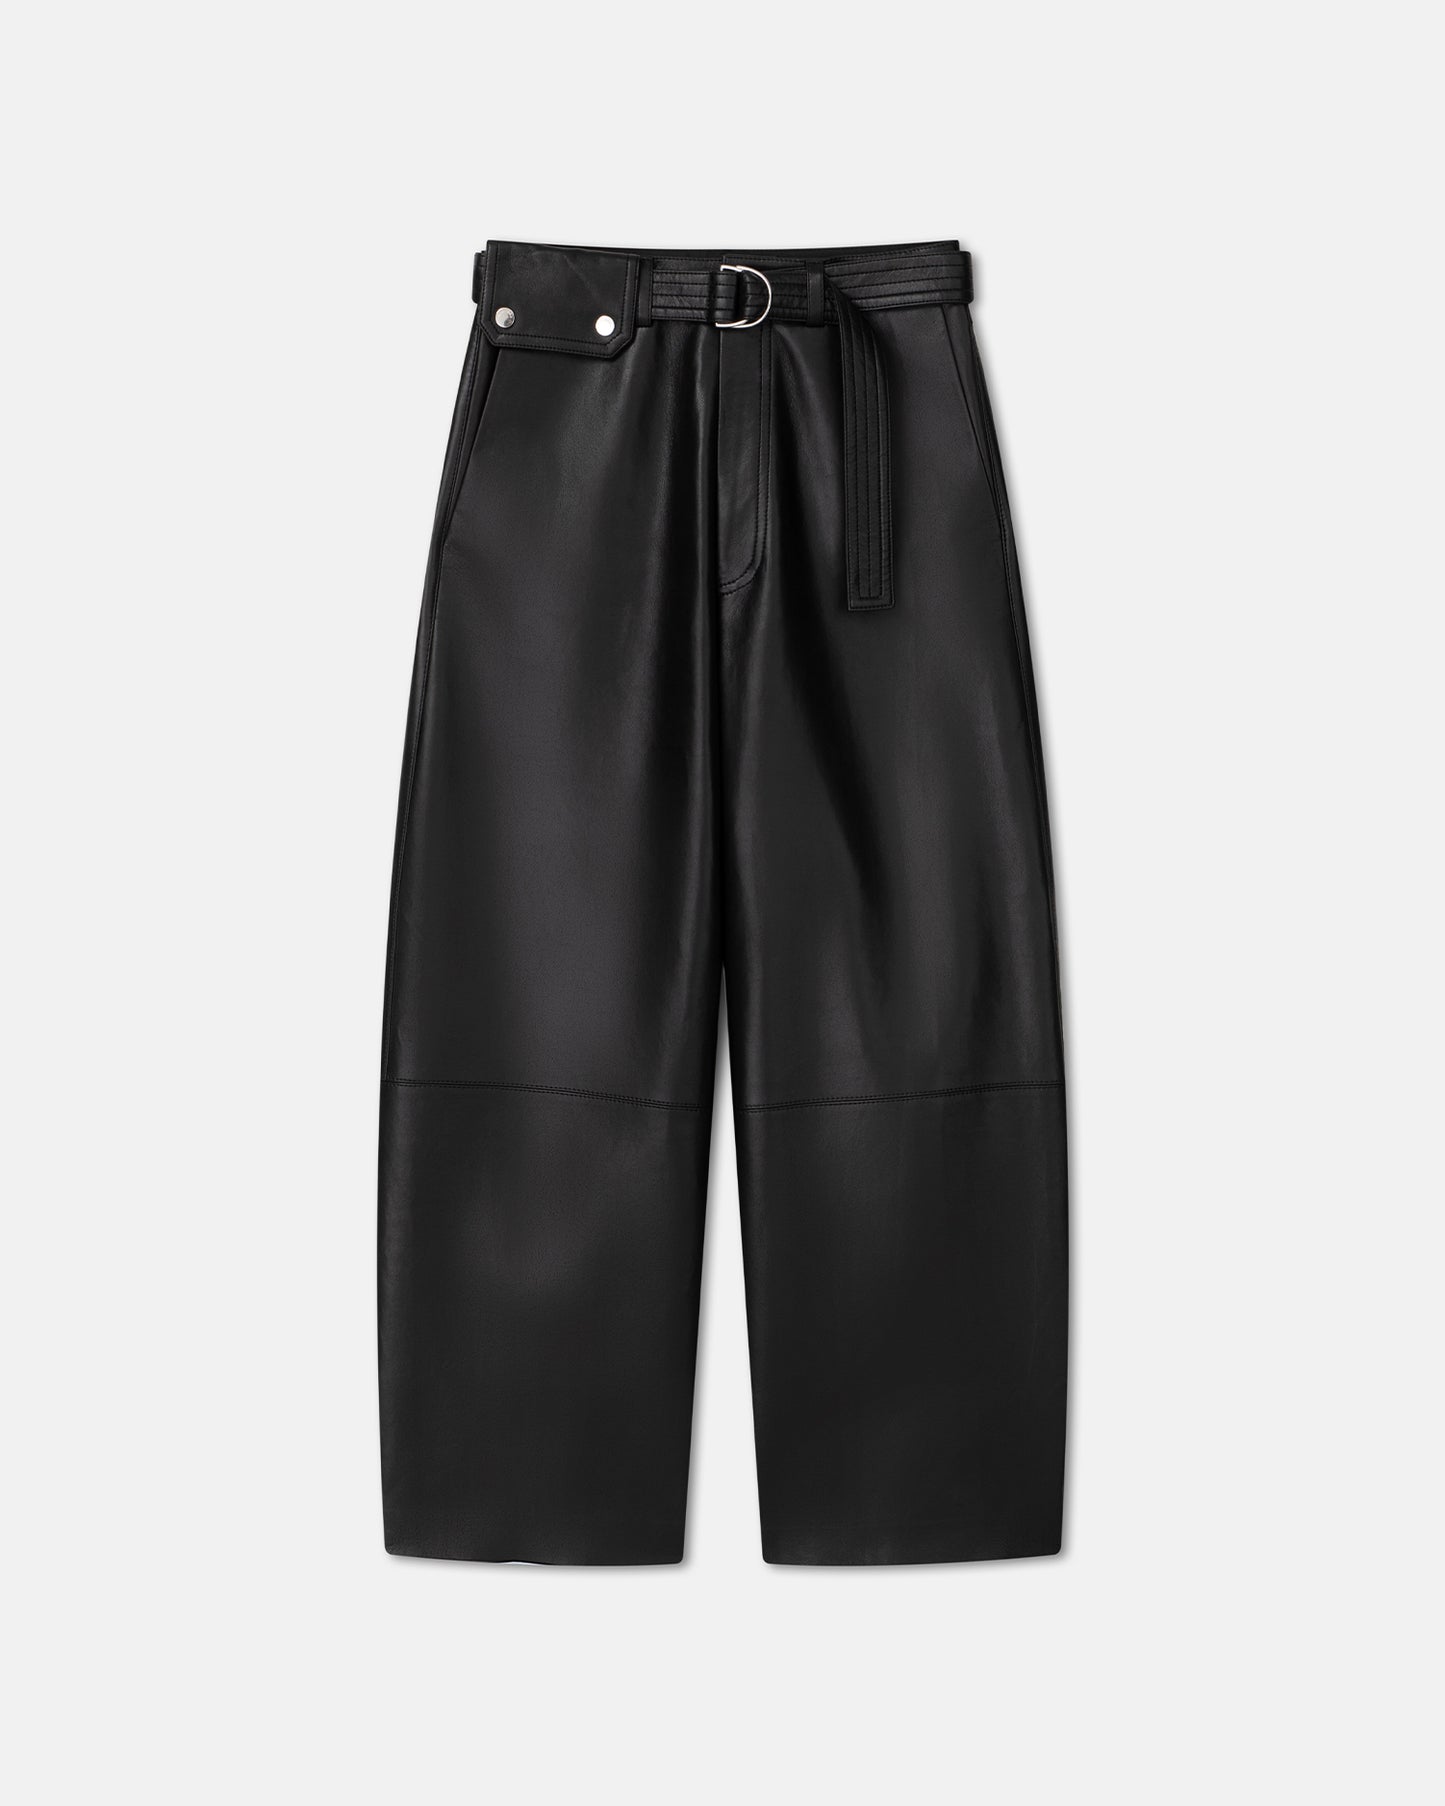 Sanna - Belted Regenerated Leather Pants - Black